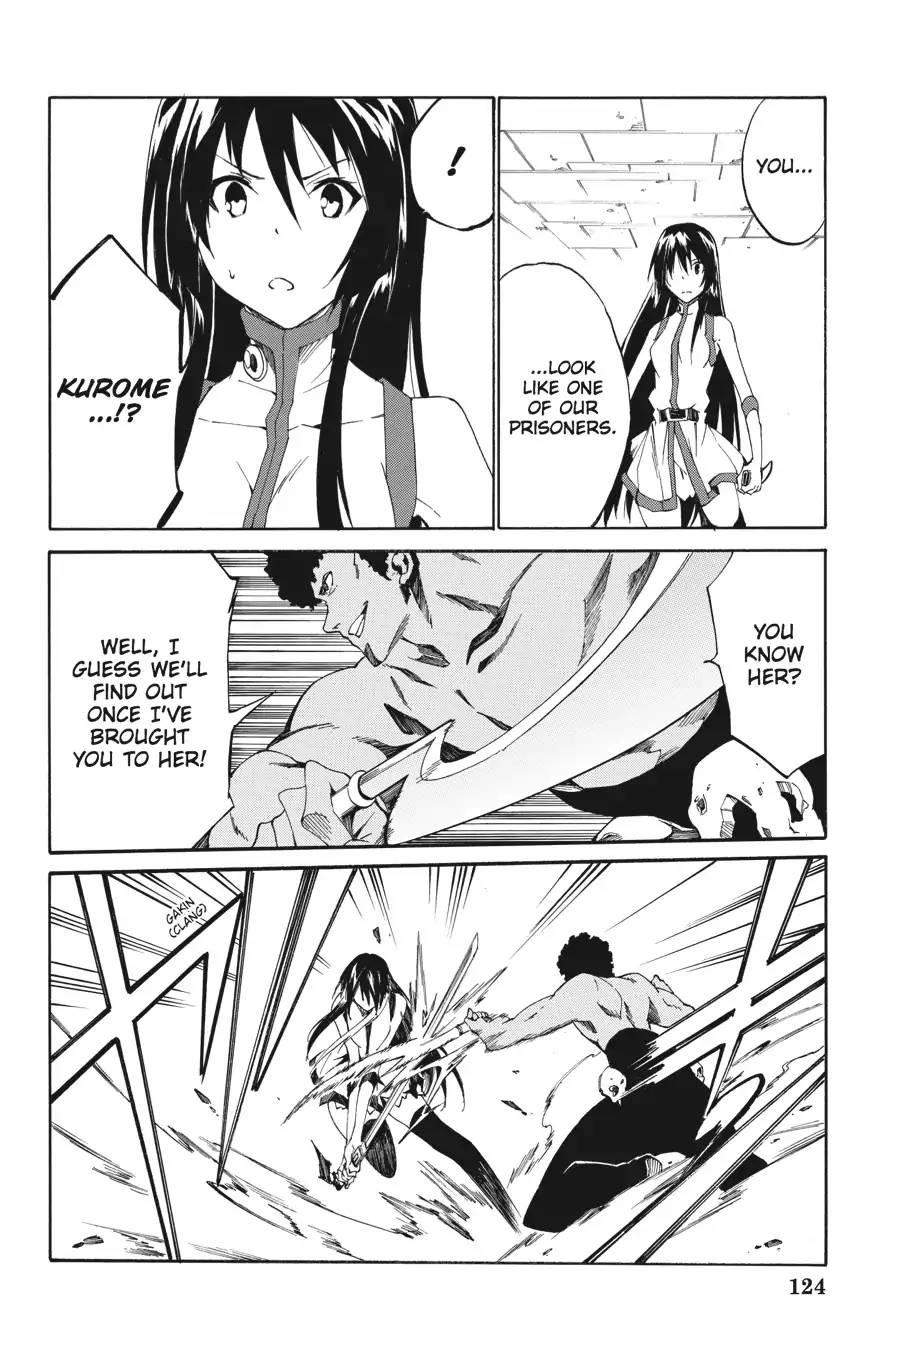 Akame ga KILL! Zero Ch.58 Page 11 - Mangago